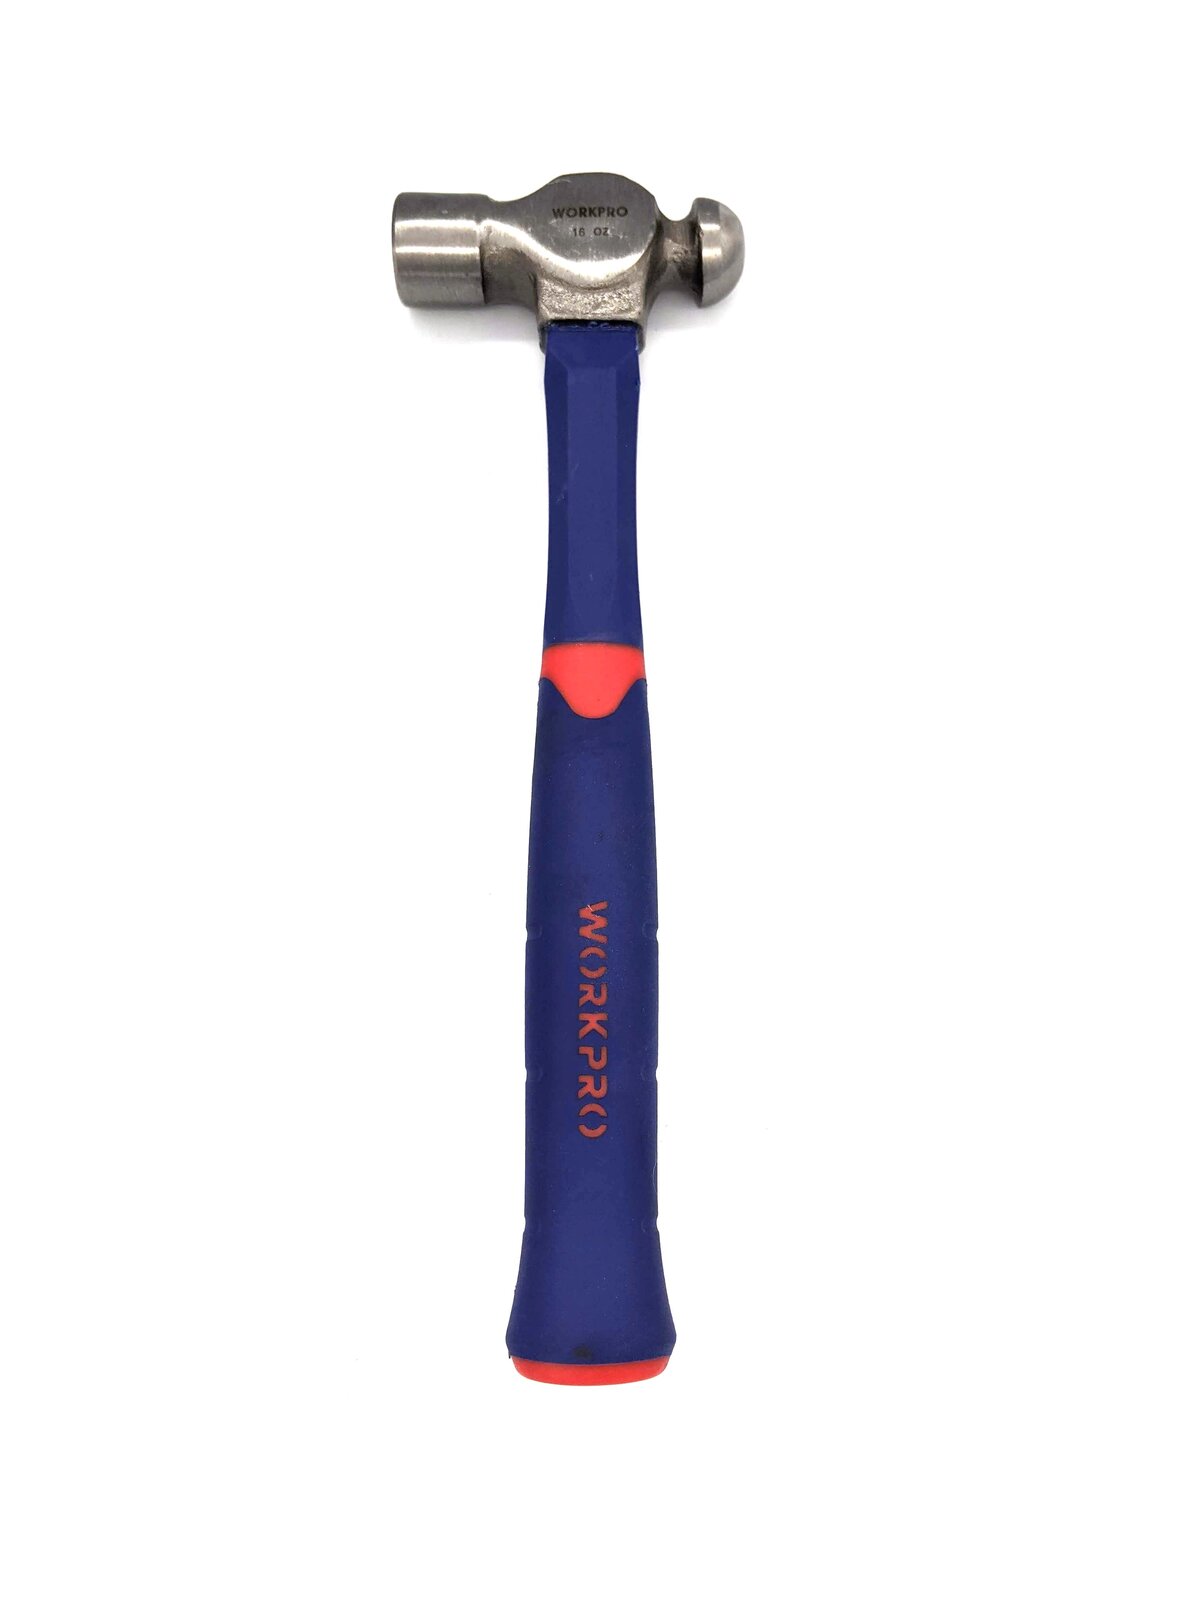 Ball-Pein Hammer With Fiberglass Handle